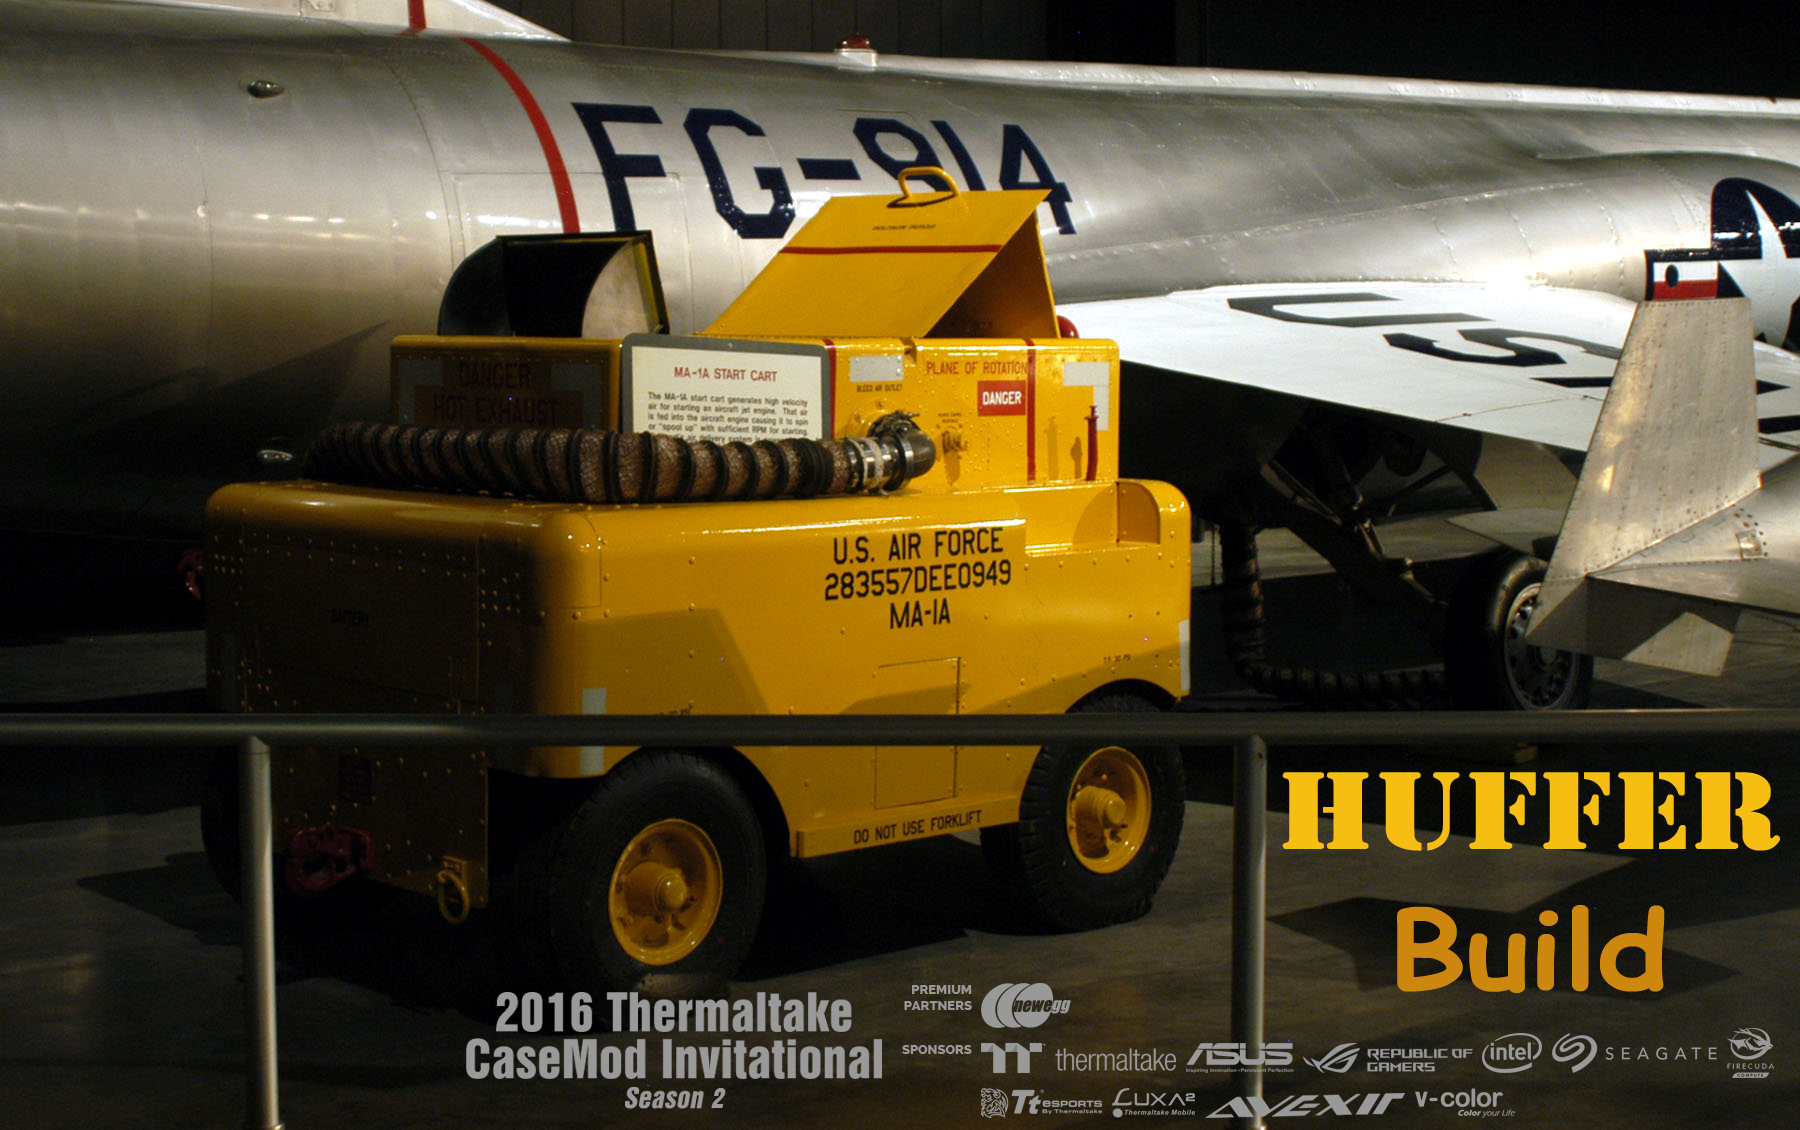 2016 Thermaltake CaseMOD Invitational Season 2 - HUFFER Build